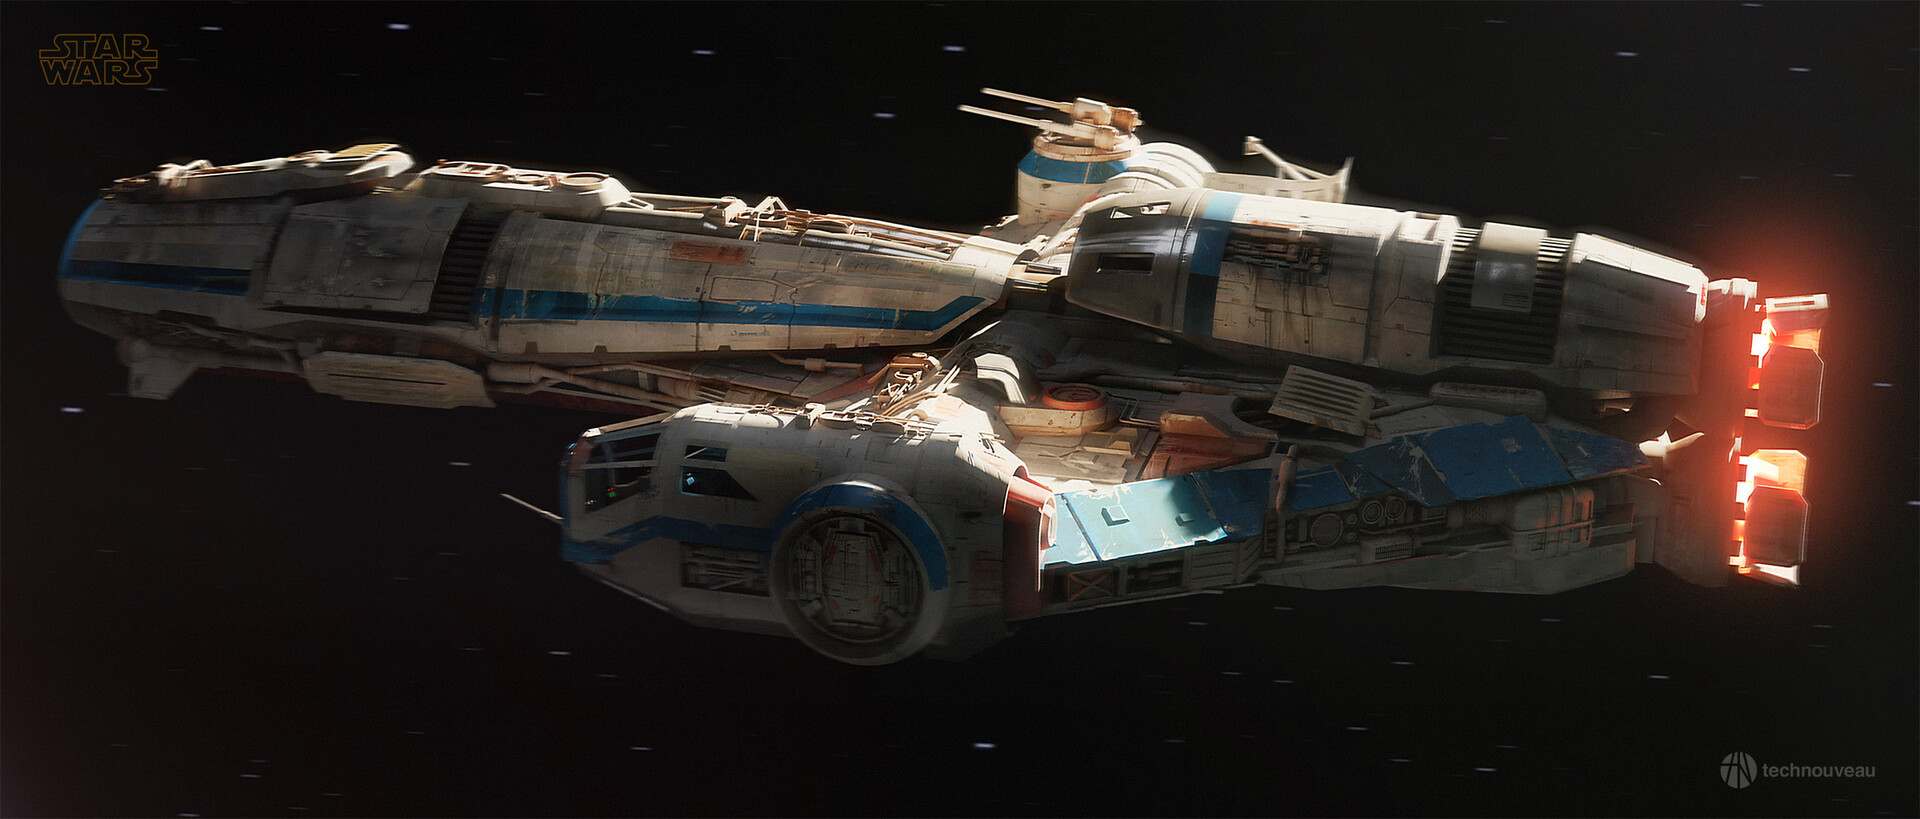 Corellian Tanker Star Wars 3D Render CGi Science Fiction Spaceship ArtStation 1920x819